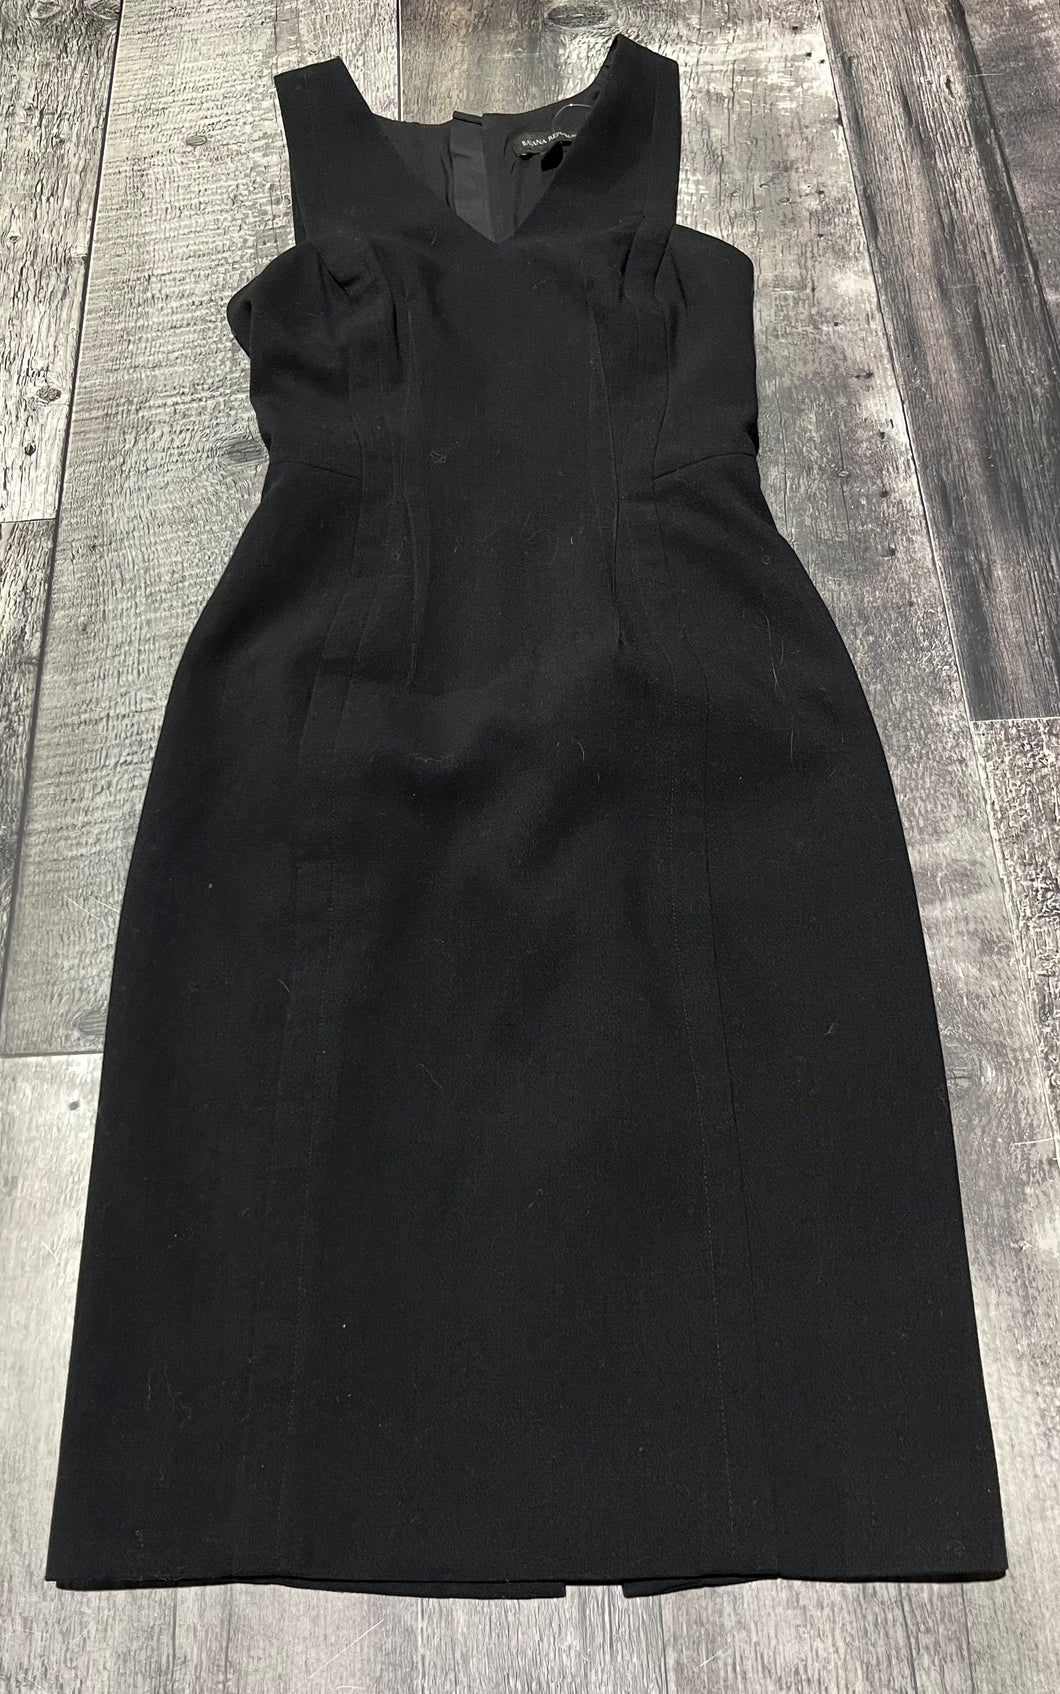 Banana Republic black dress - Hers size 00